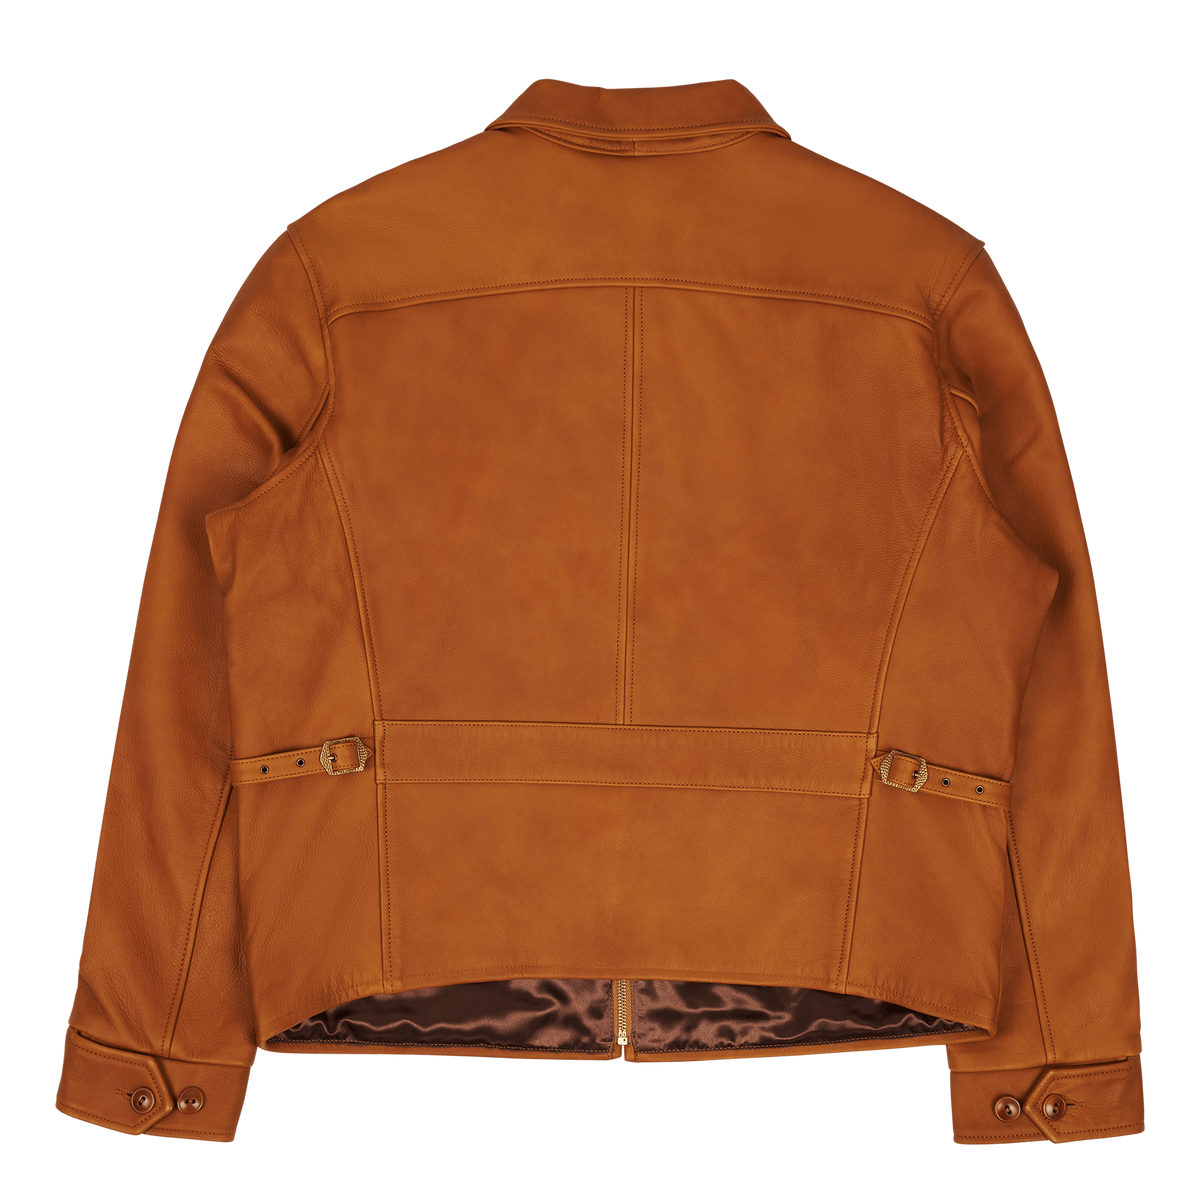 Lvc 1940s Leather Coat Neutral